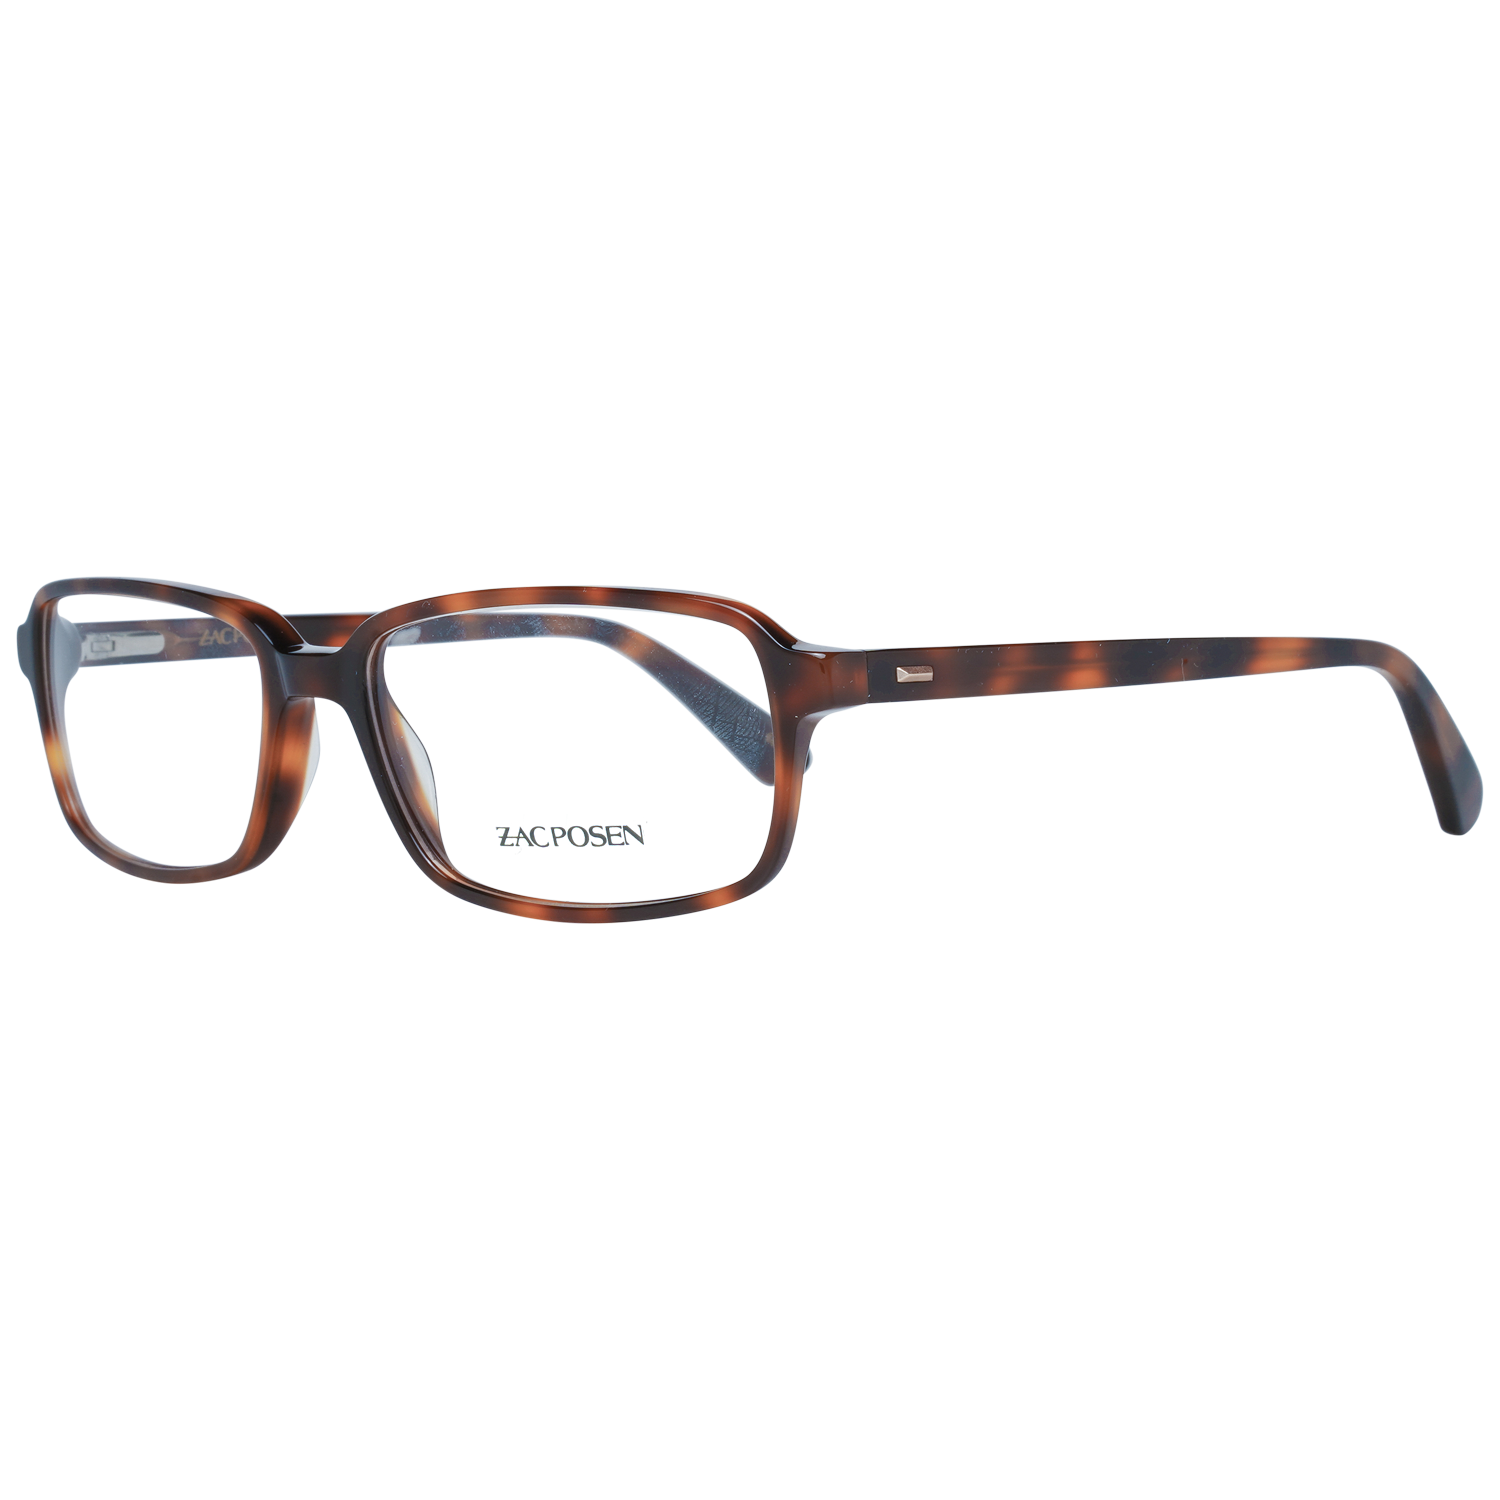 Zac Posen Frames Zac Posen Optical Frame ZMIL TO 55 Milo Eyeglasses Eyewear UK USA Australia 